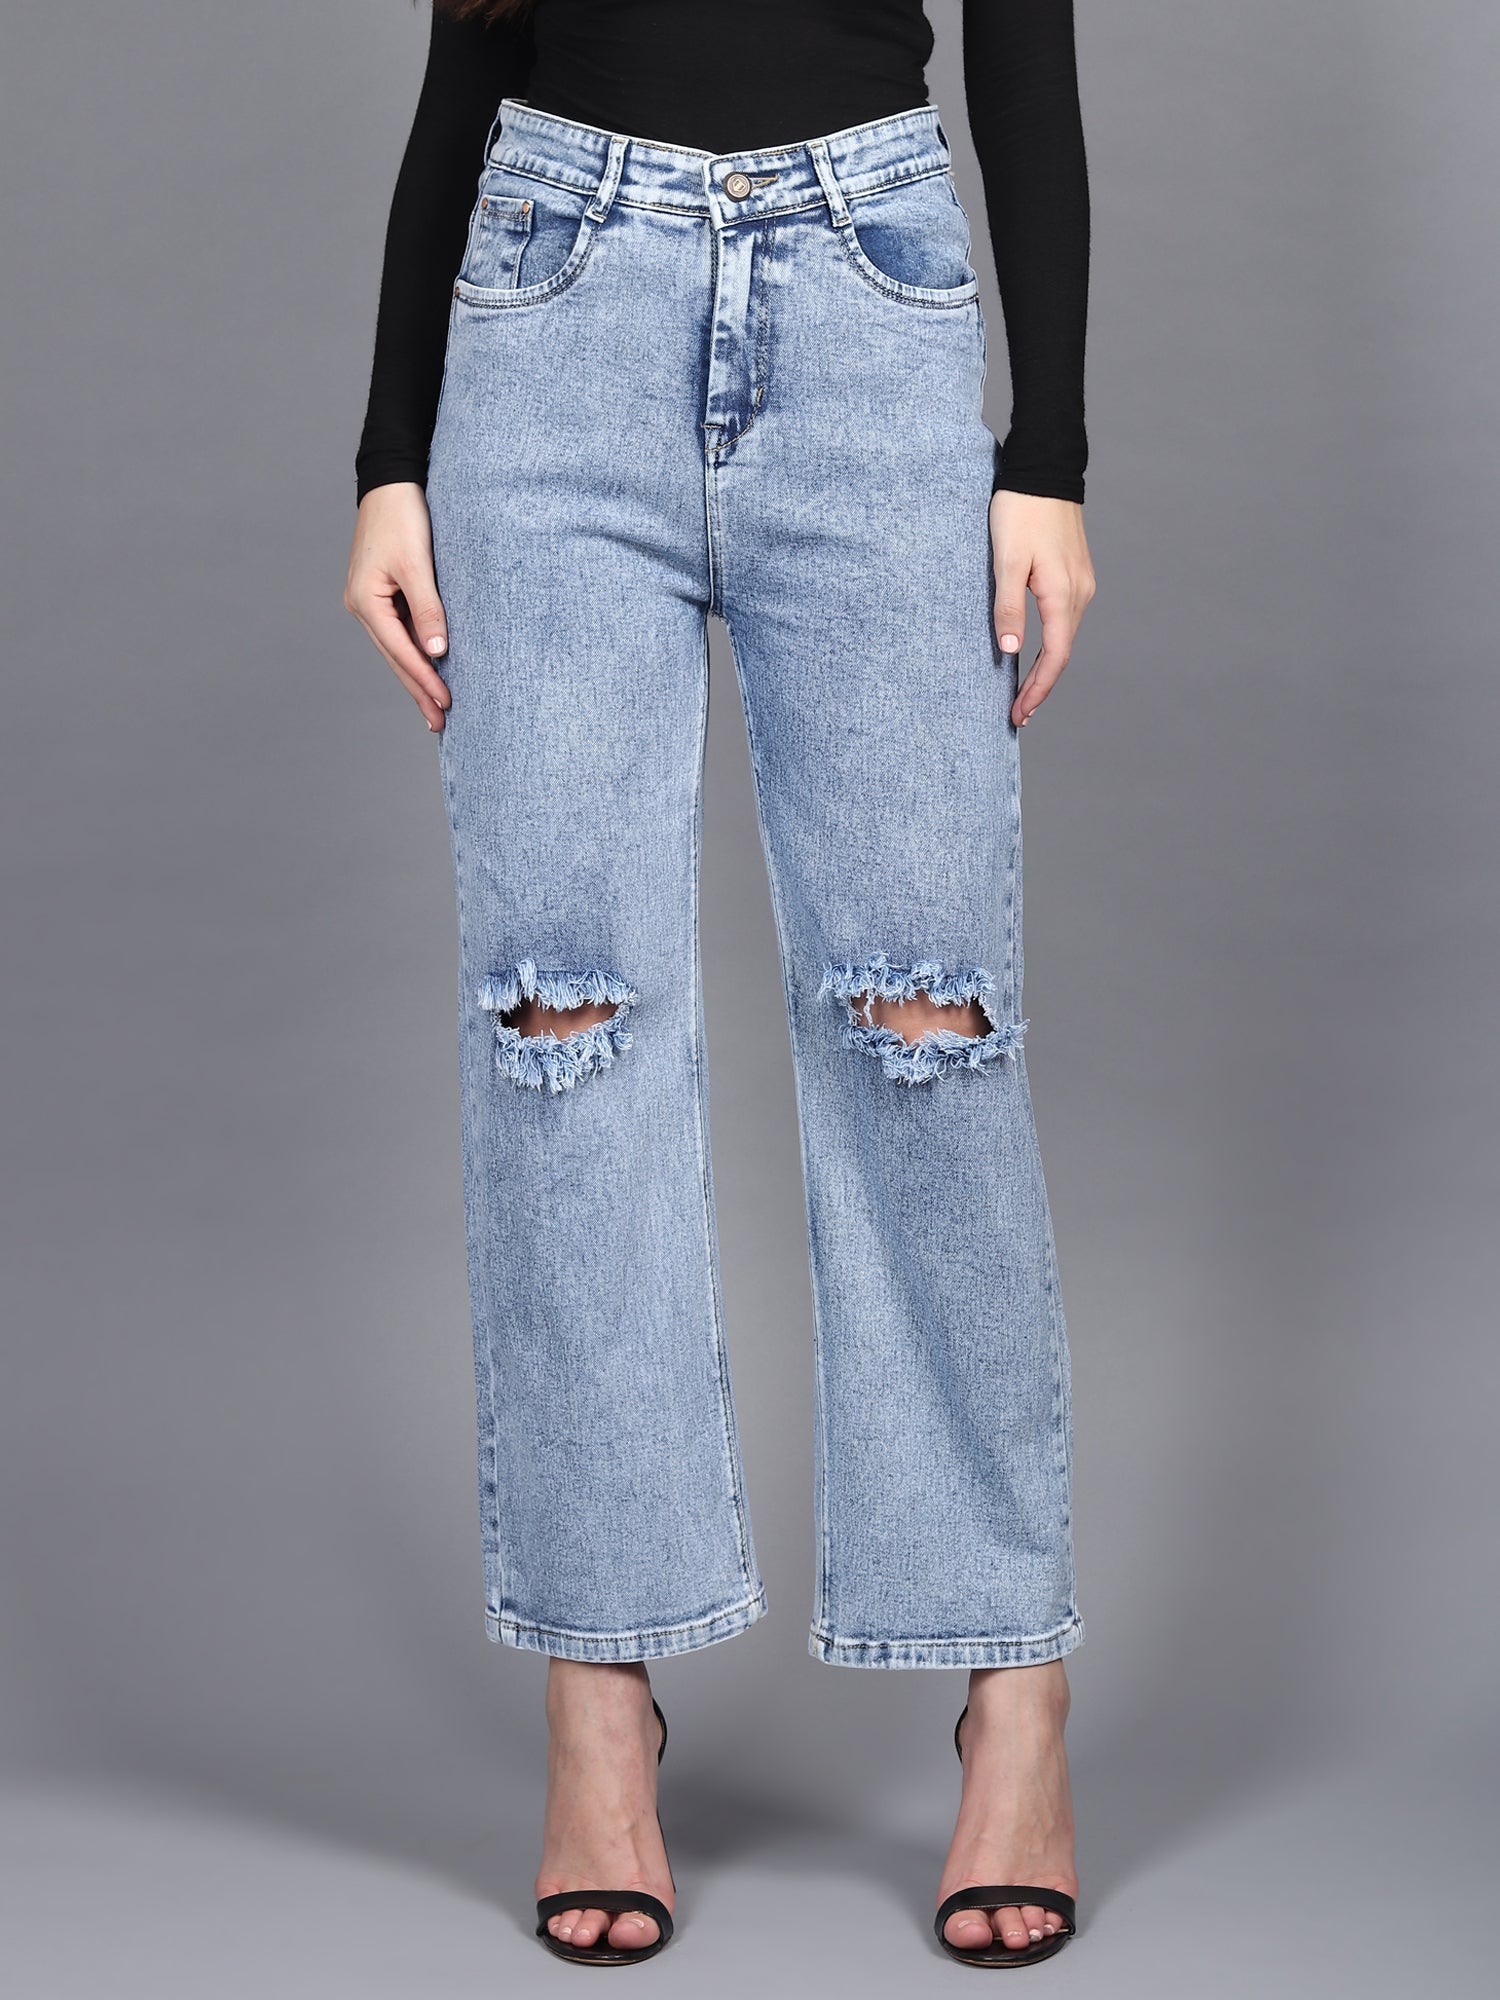 Tinseltown Lycra/Spandex Jeans For Women - Macy's